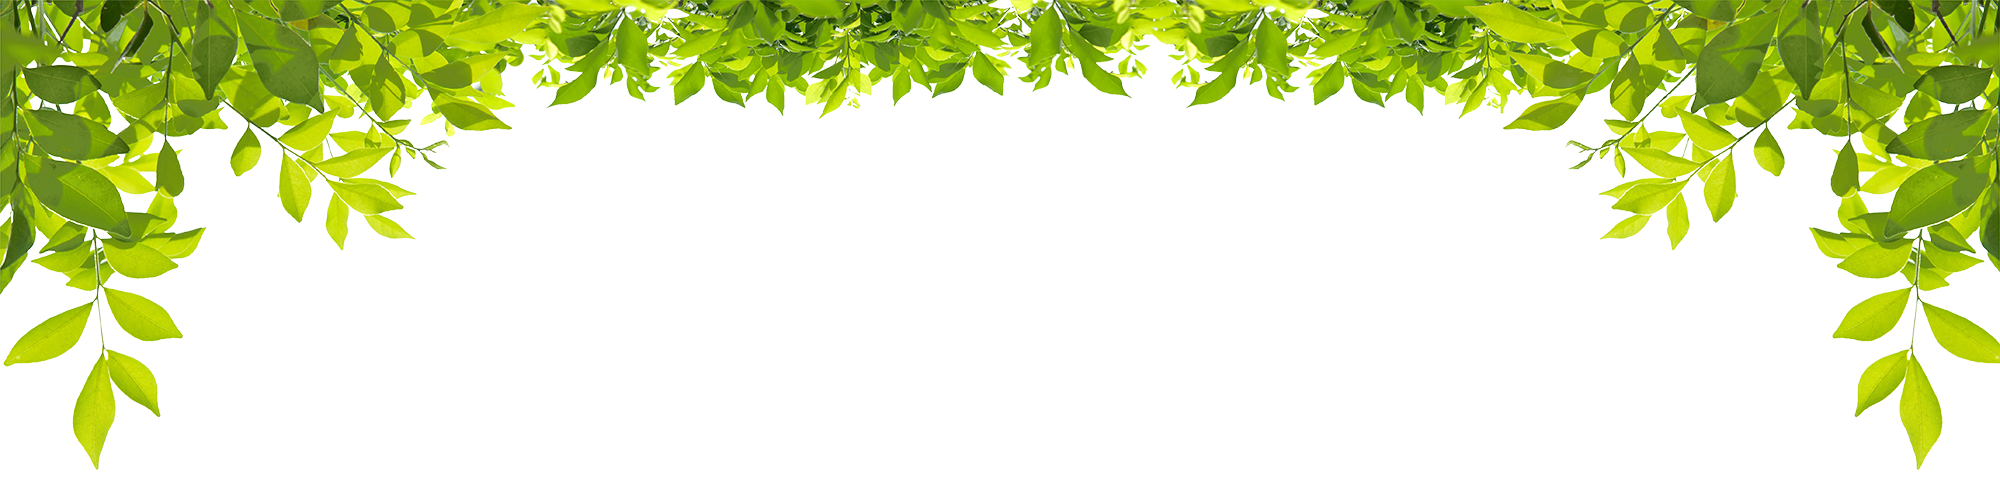 Eco leaf border